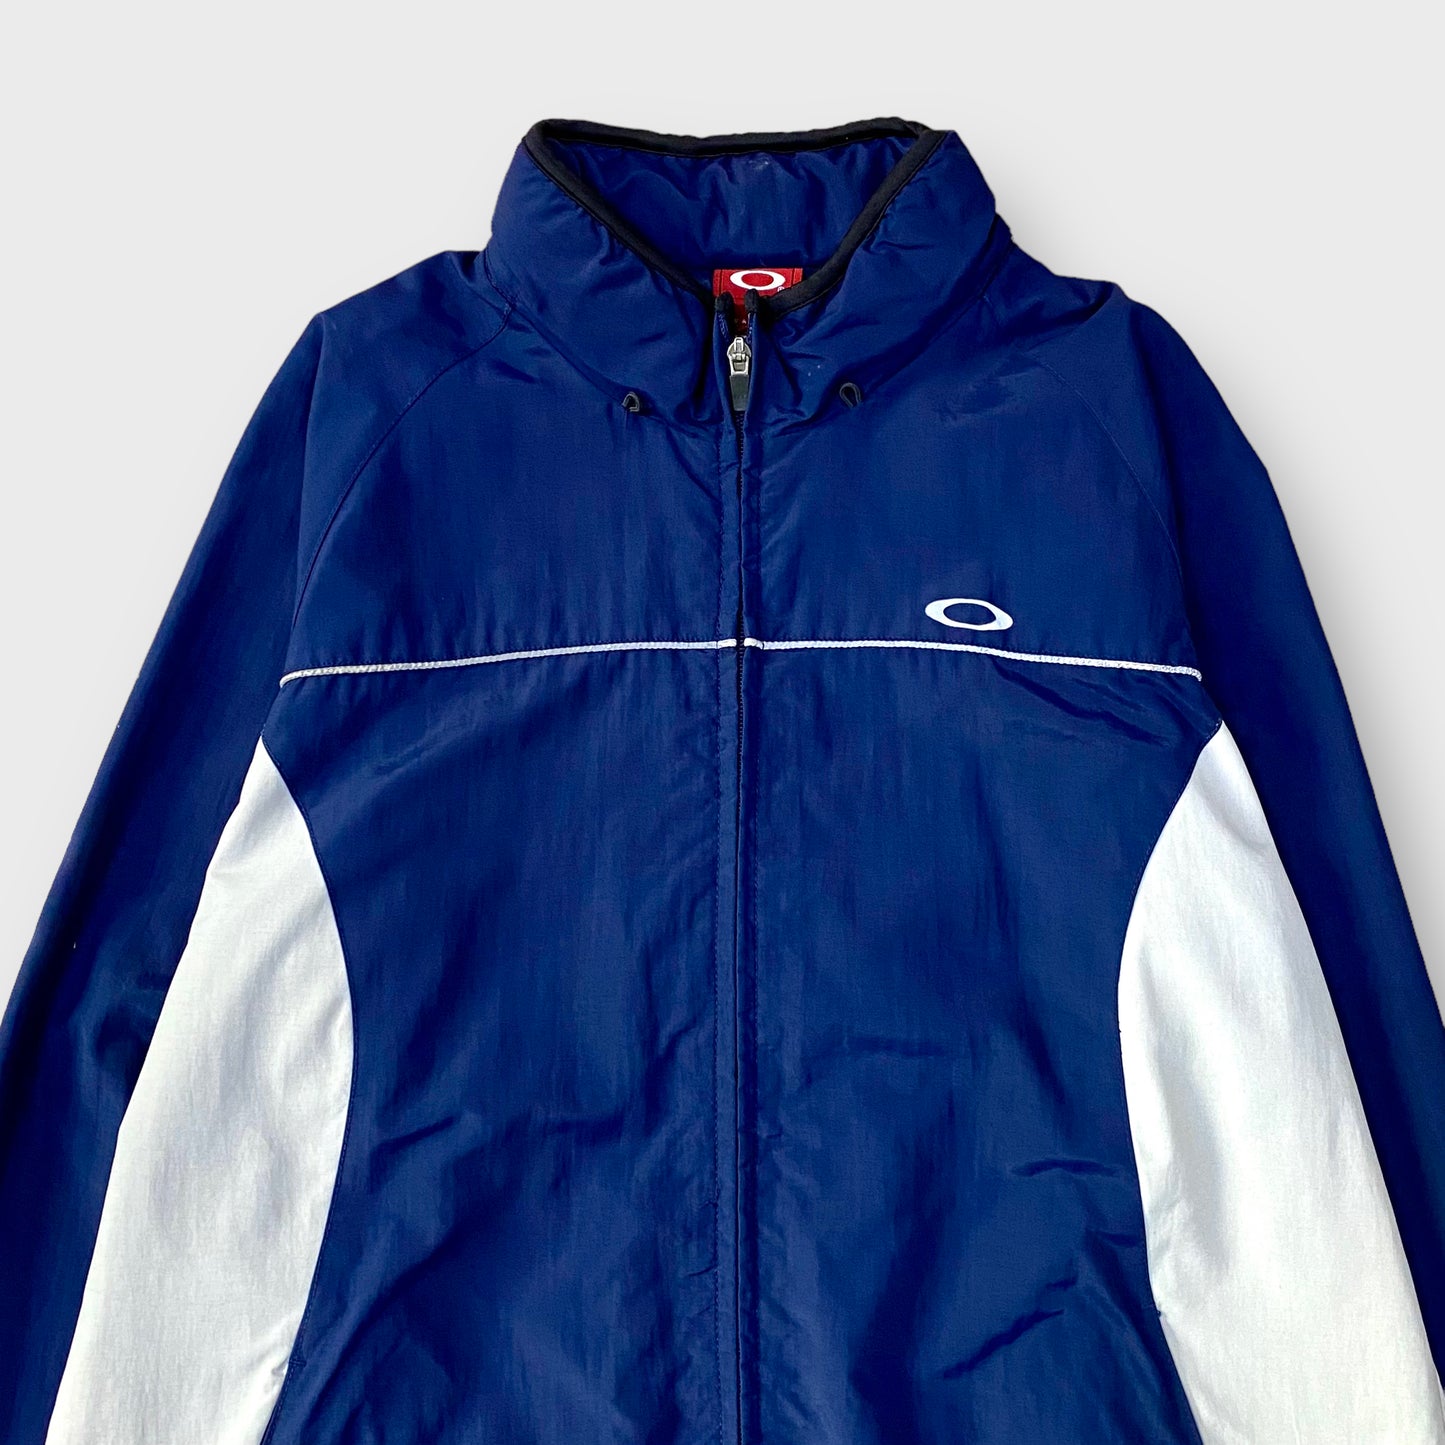 00’s "OAKLEY" Bi-color nylon jacket